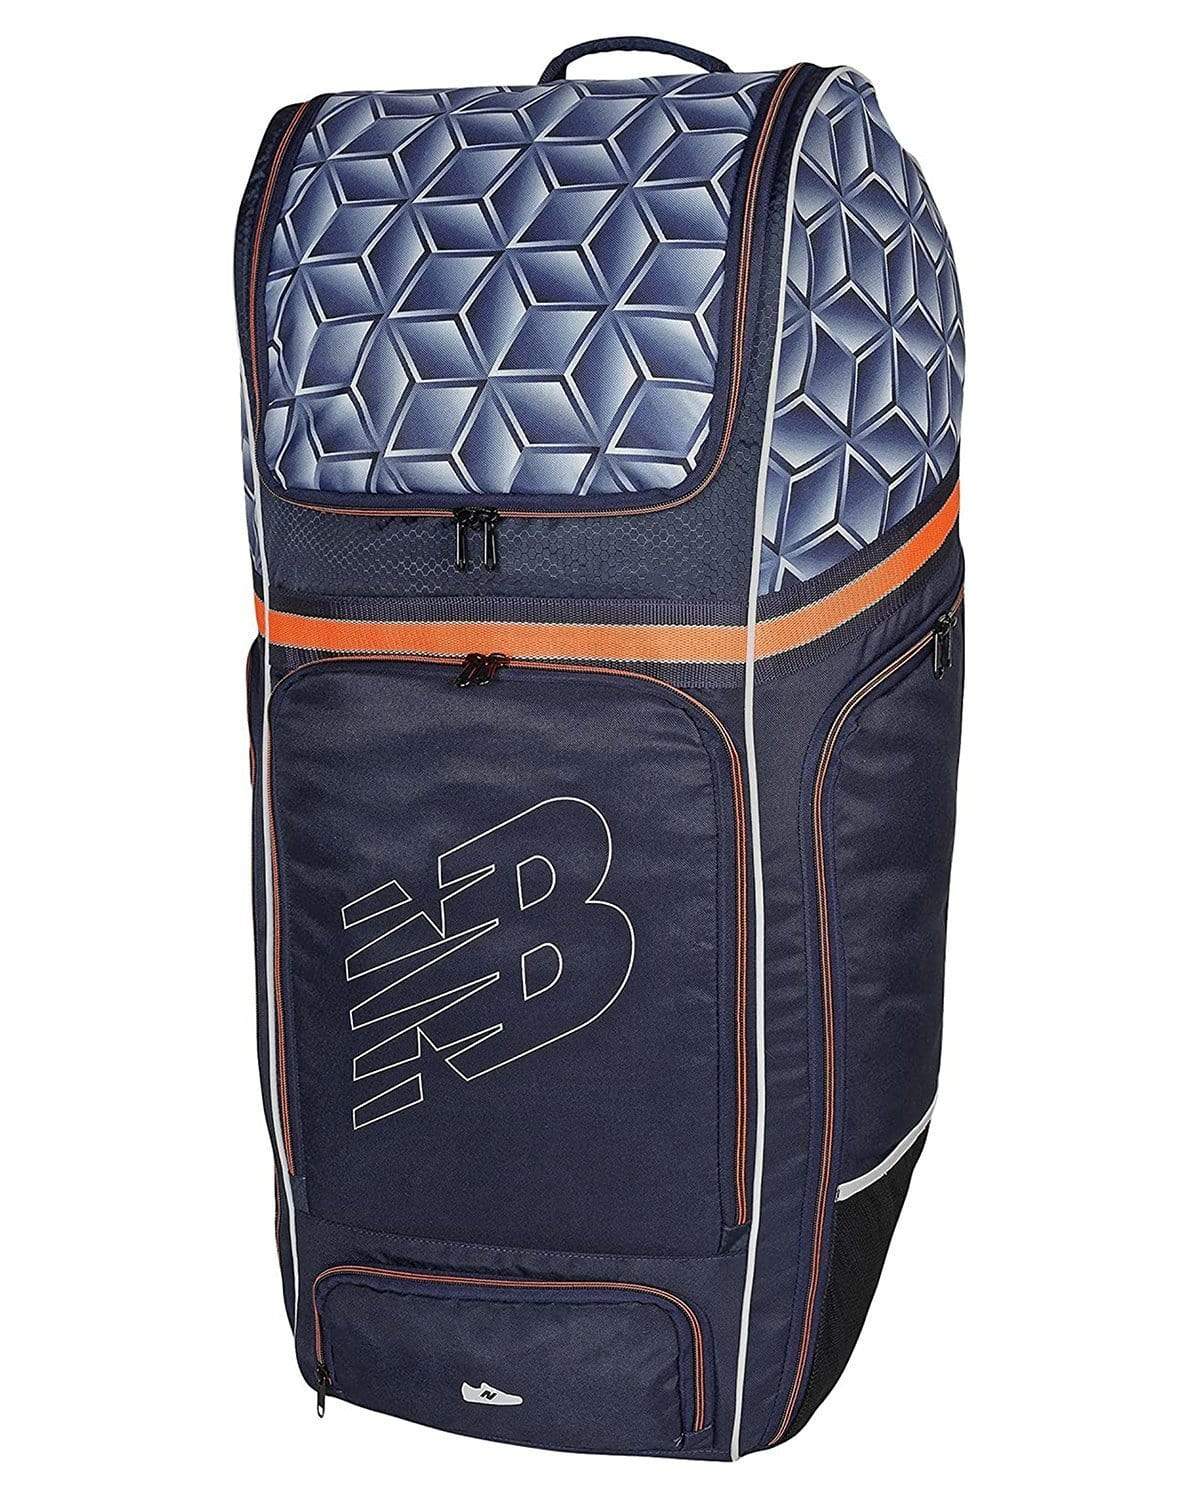 New Balance Cricket Bags New Balance DC1280 Duffle Cricket Bag